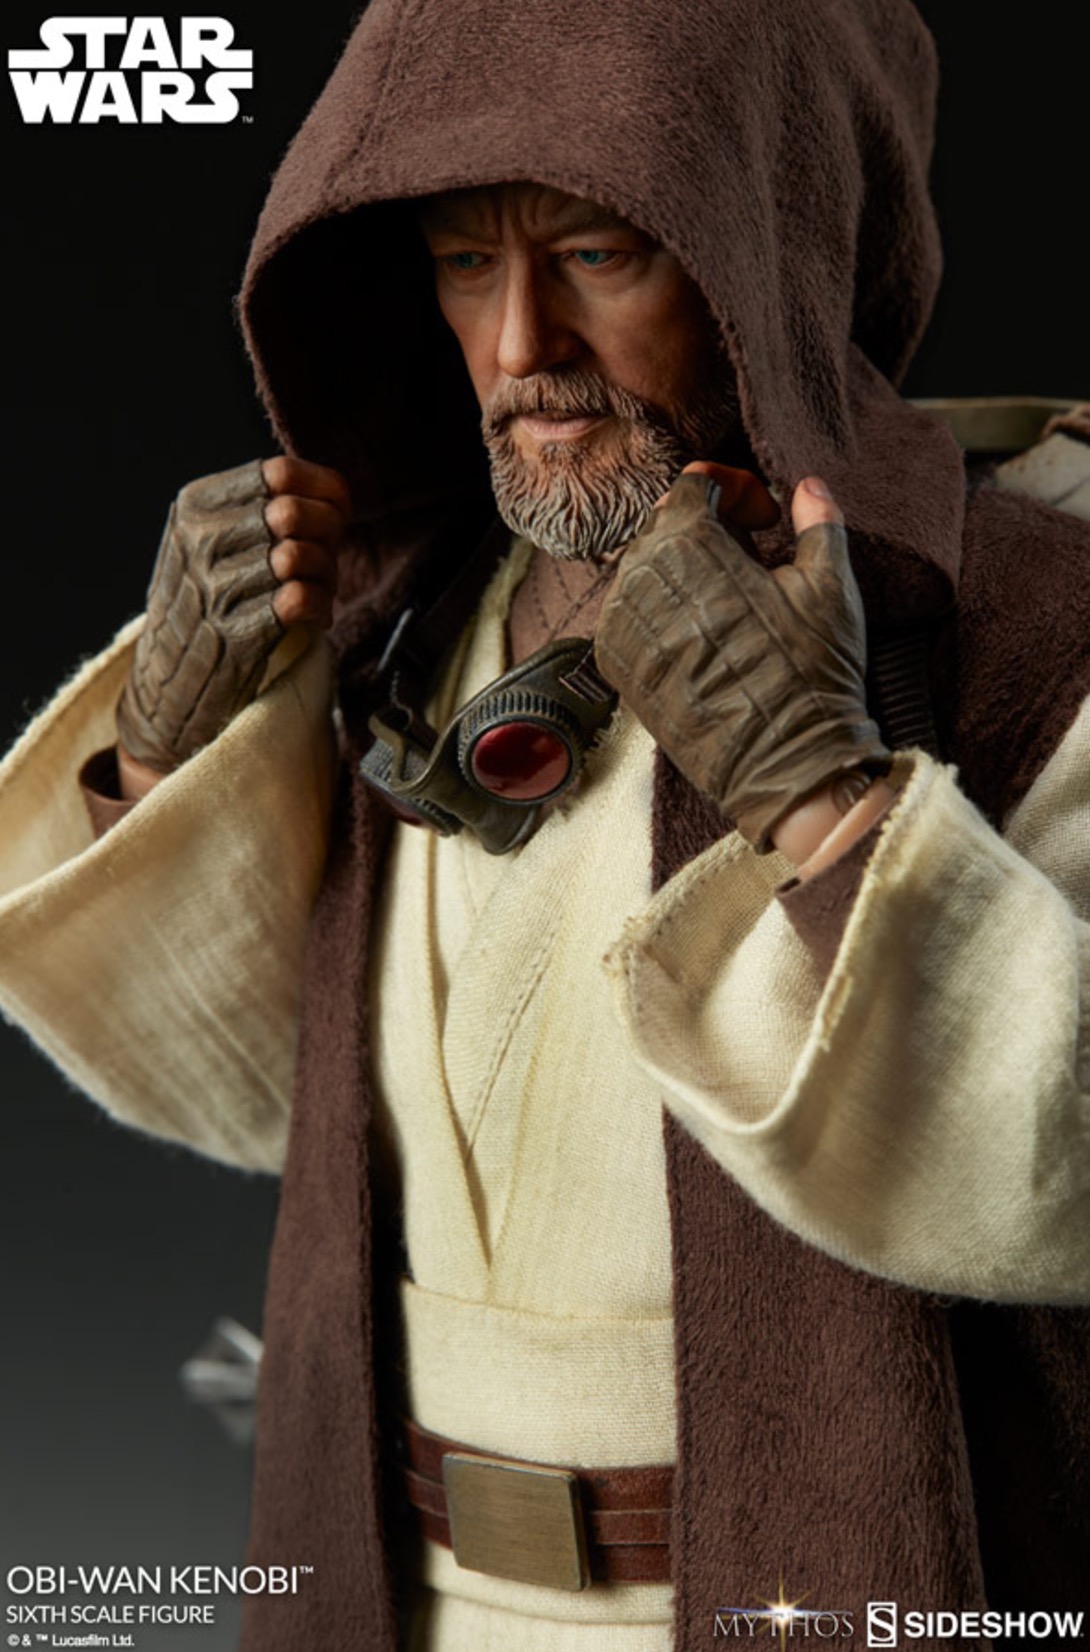 If An Obi-Wan Kenobi Movie Happens, He’ll Probably Look Like This